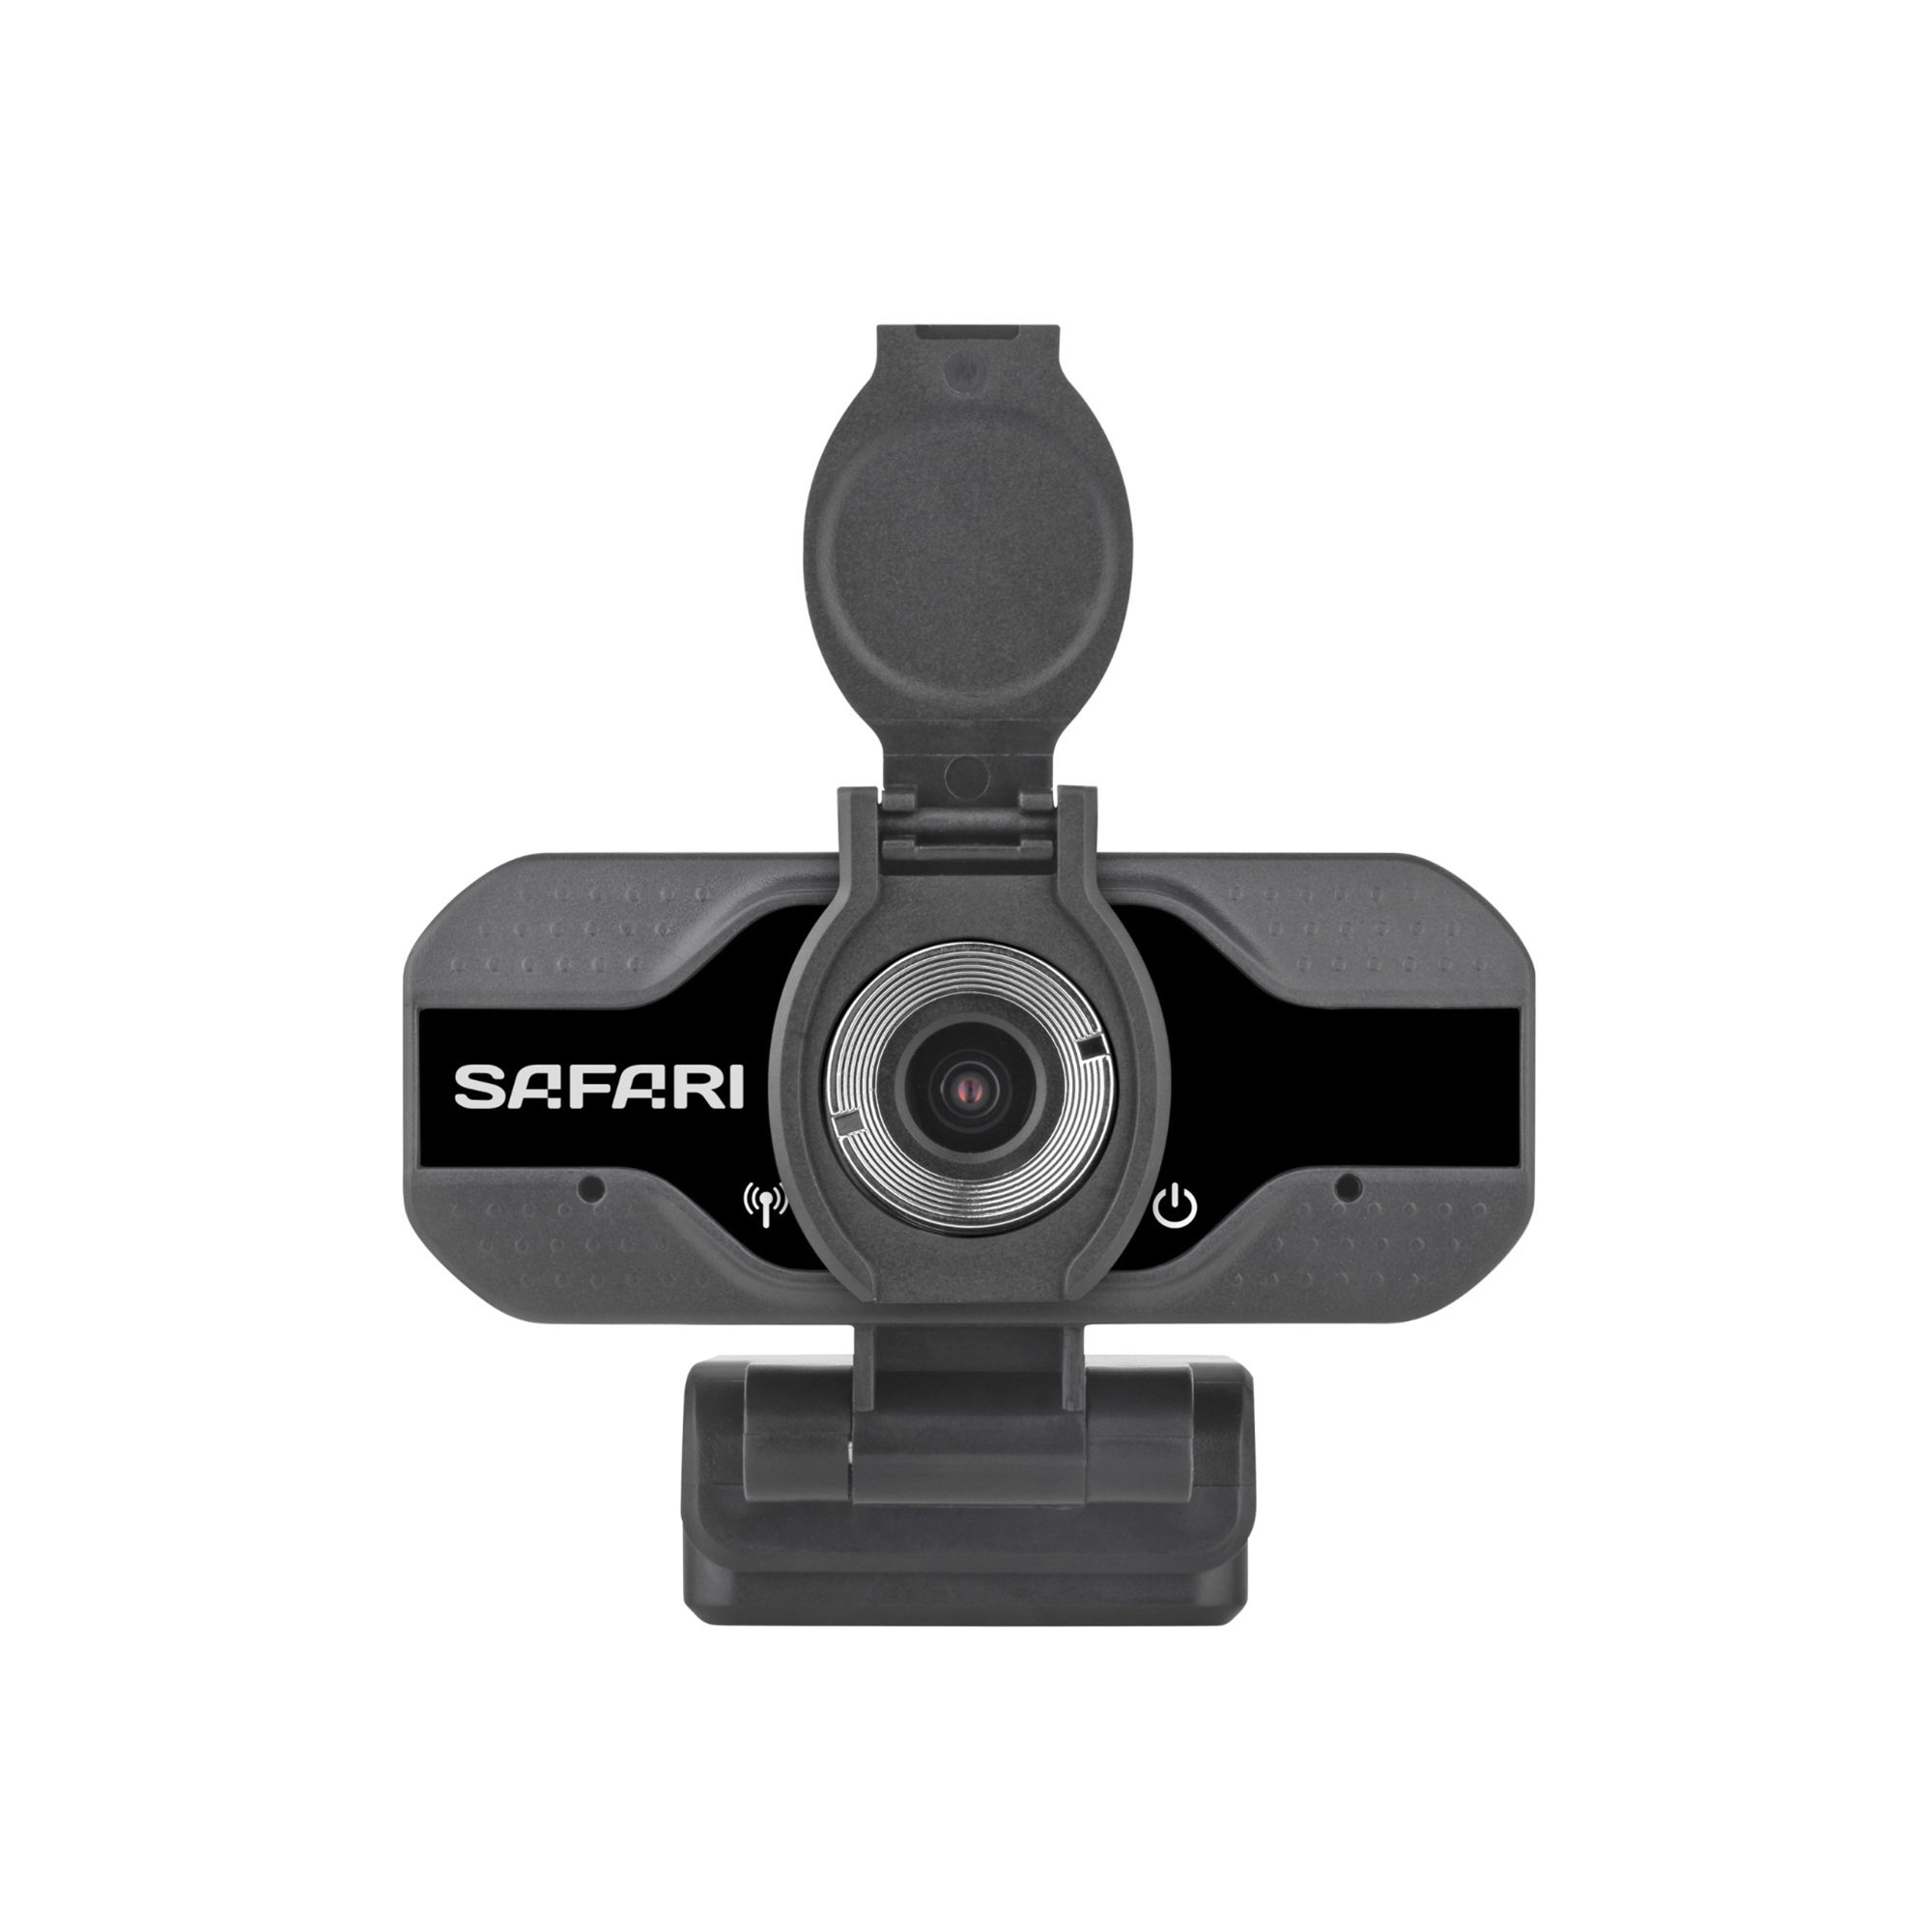 Safari 1080P HD Webcam